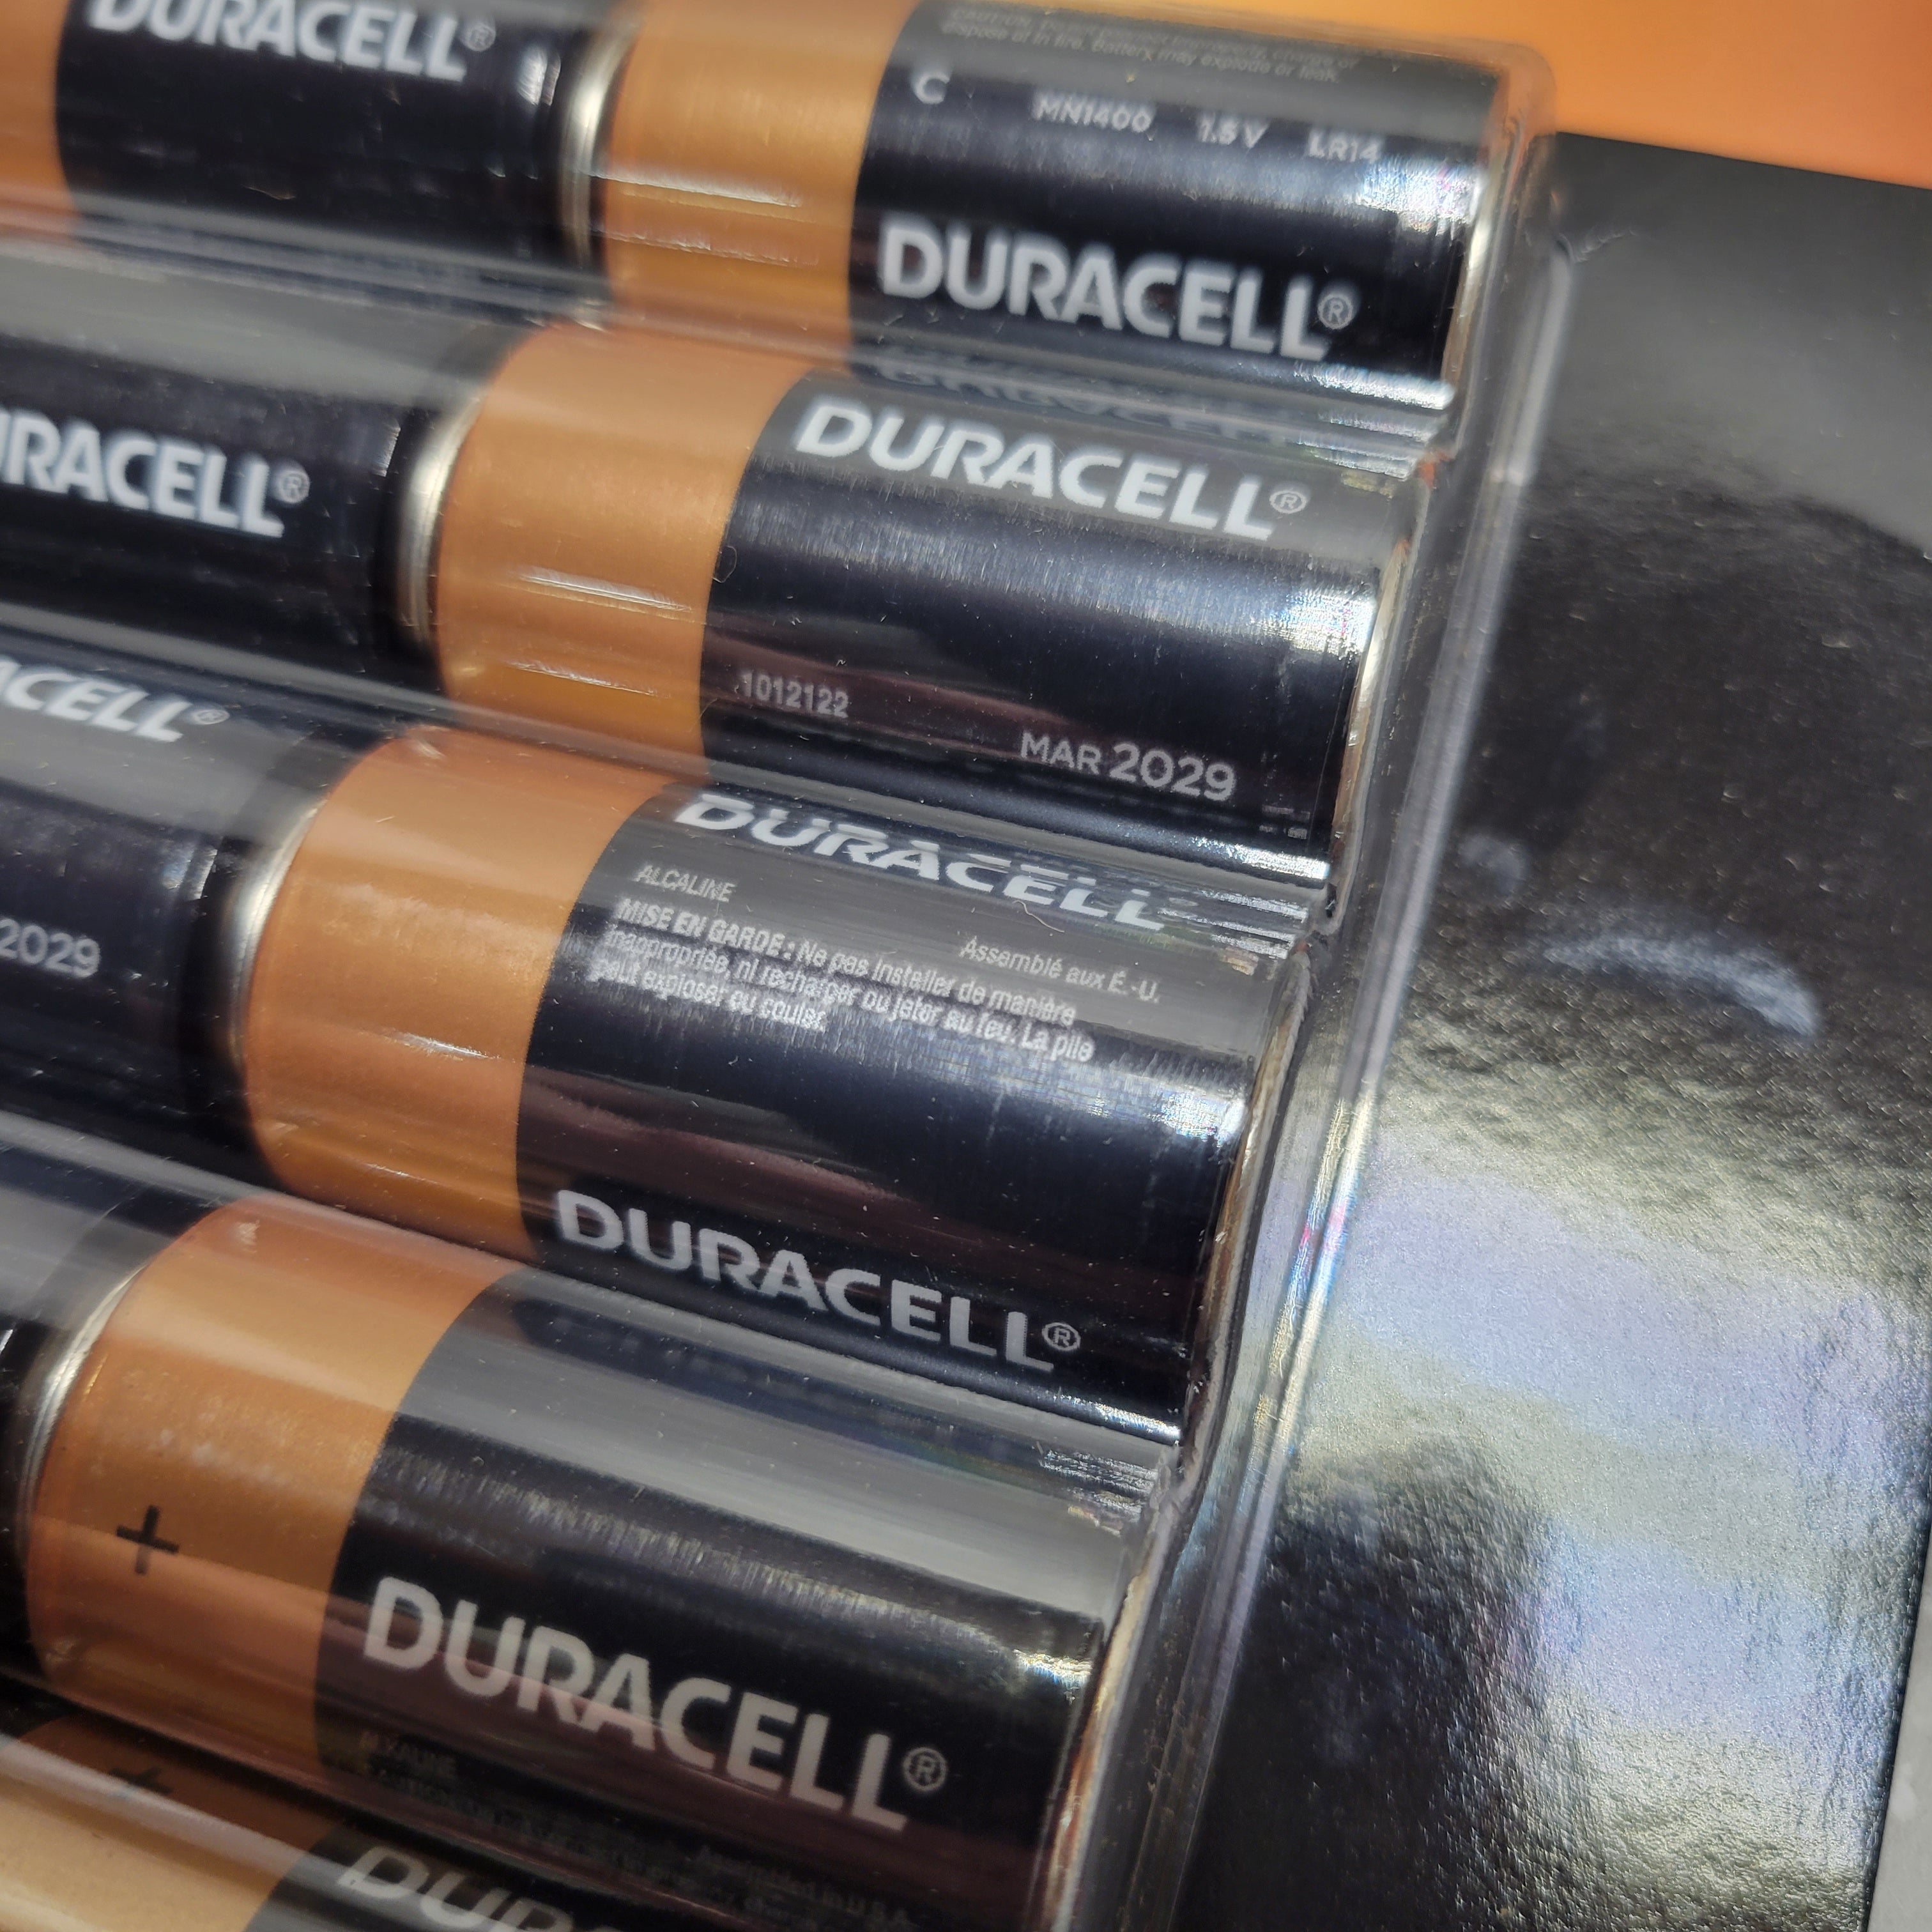 DURACELL 80240709 Coppertop Alkaline Batteries C - Exp. 3/2029,10 pk, Lot of 4 (8133094572270)